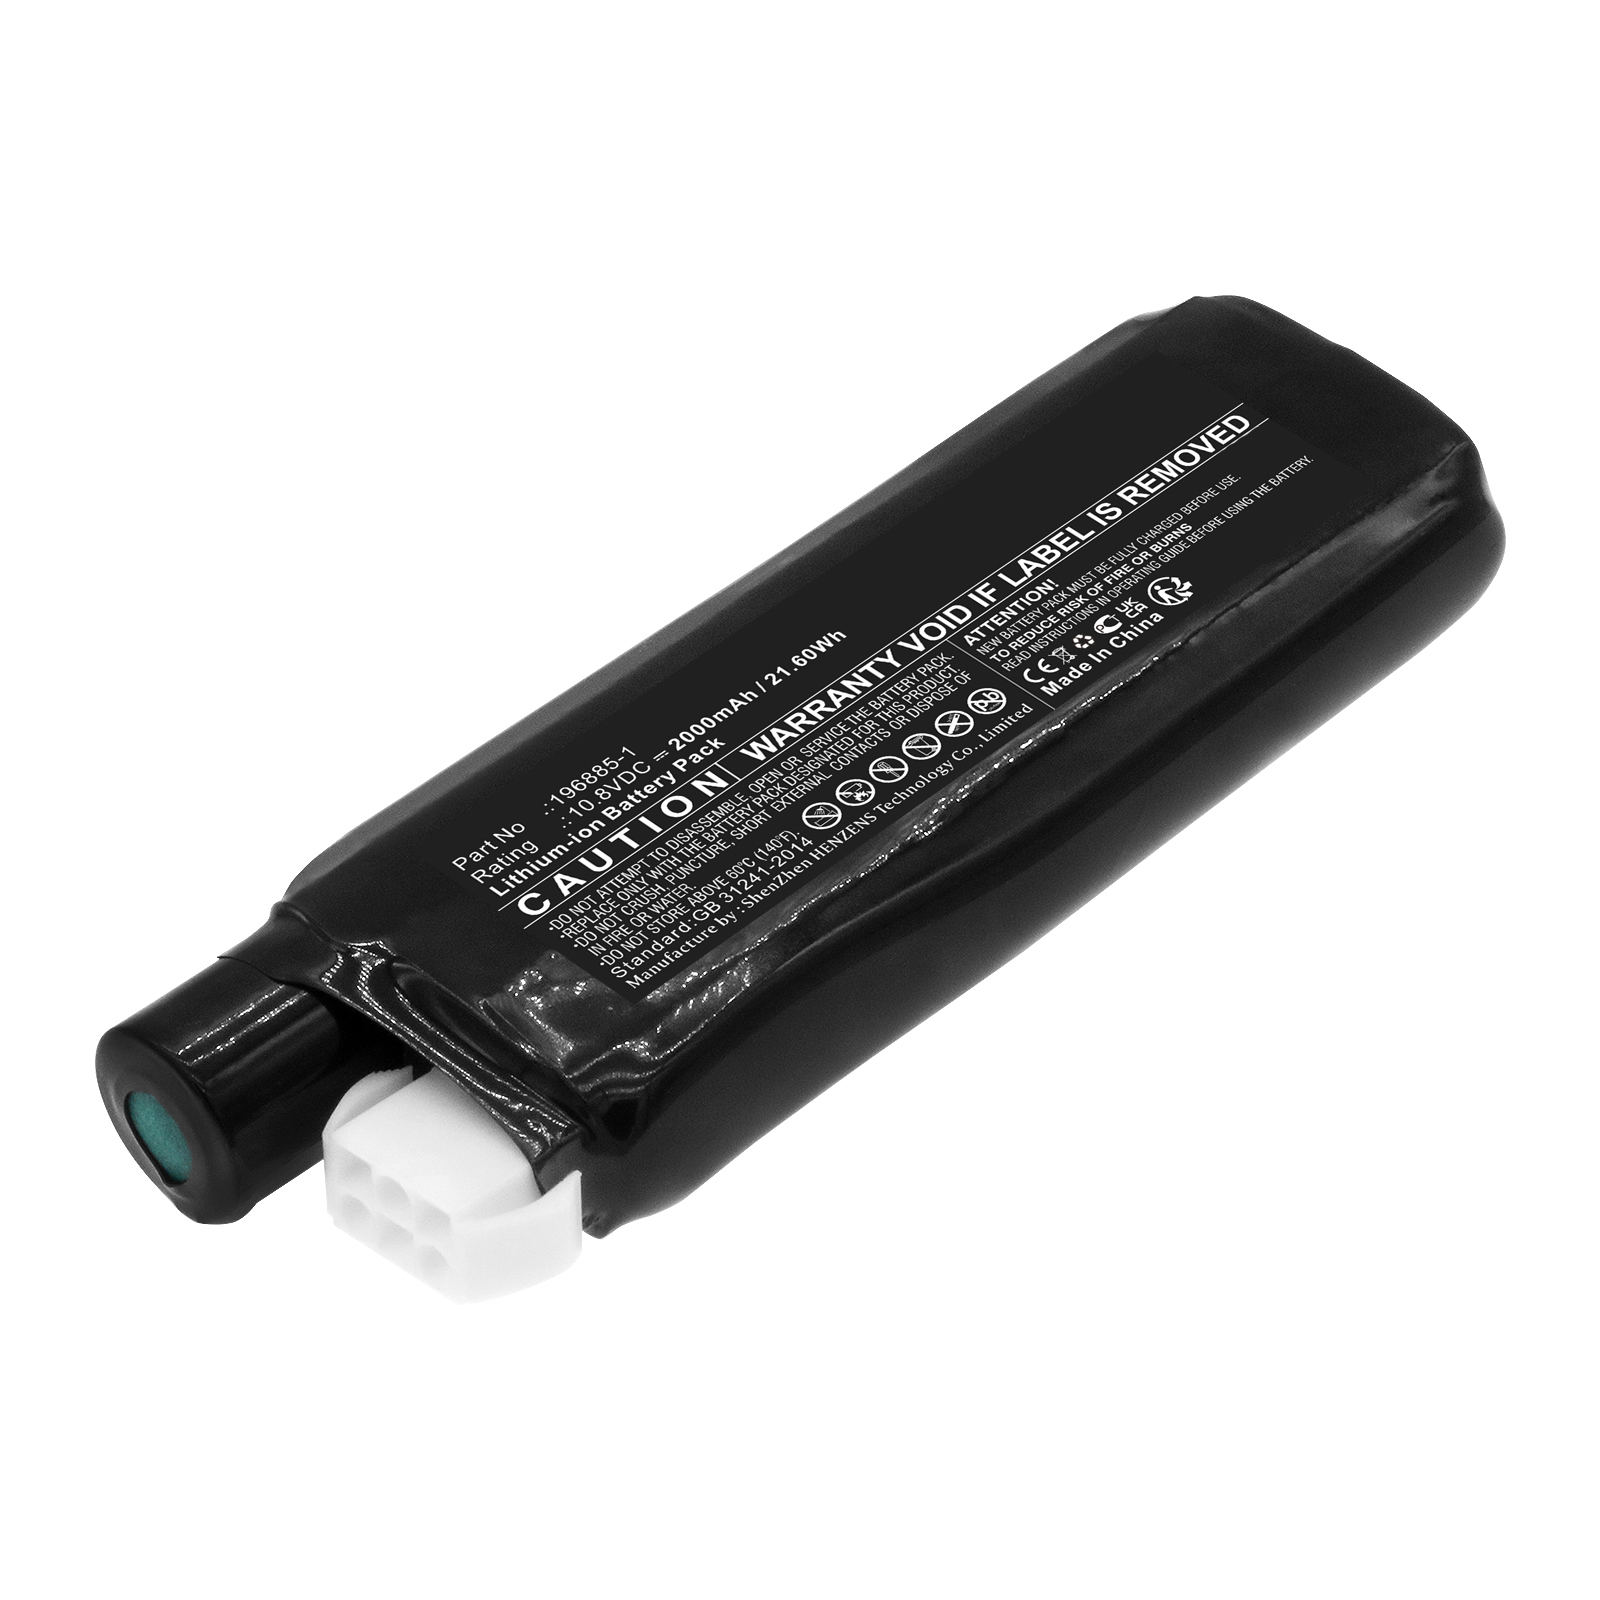 Synergy Digital Vacuum Cleaner Battery, Compatible with Makita 196885-1 Vacuum Cleaner Battery (Li-ion, 10.8V, 2000mAh)